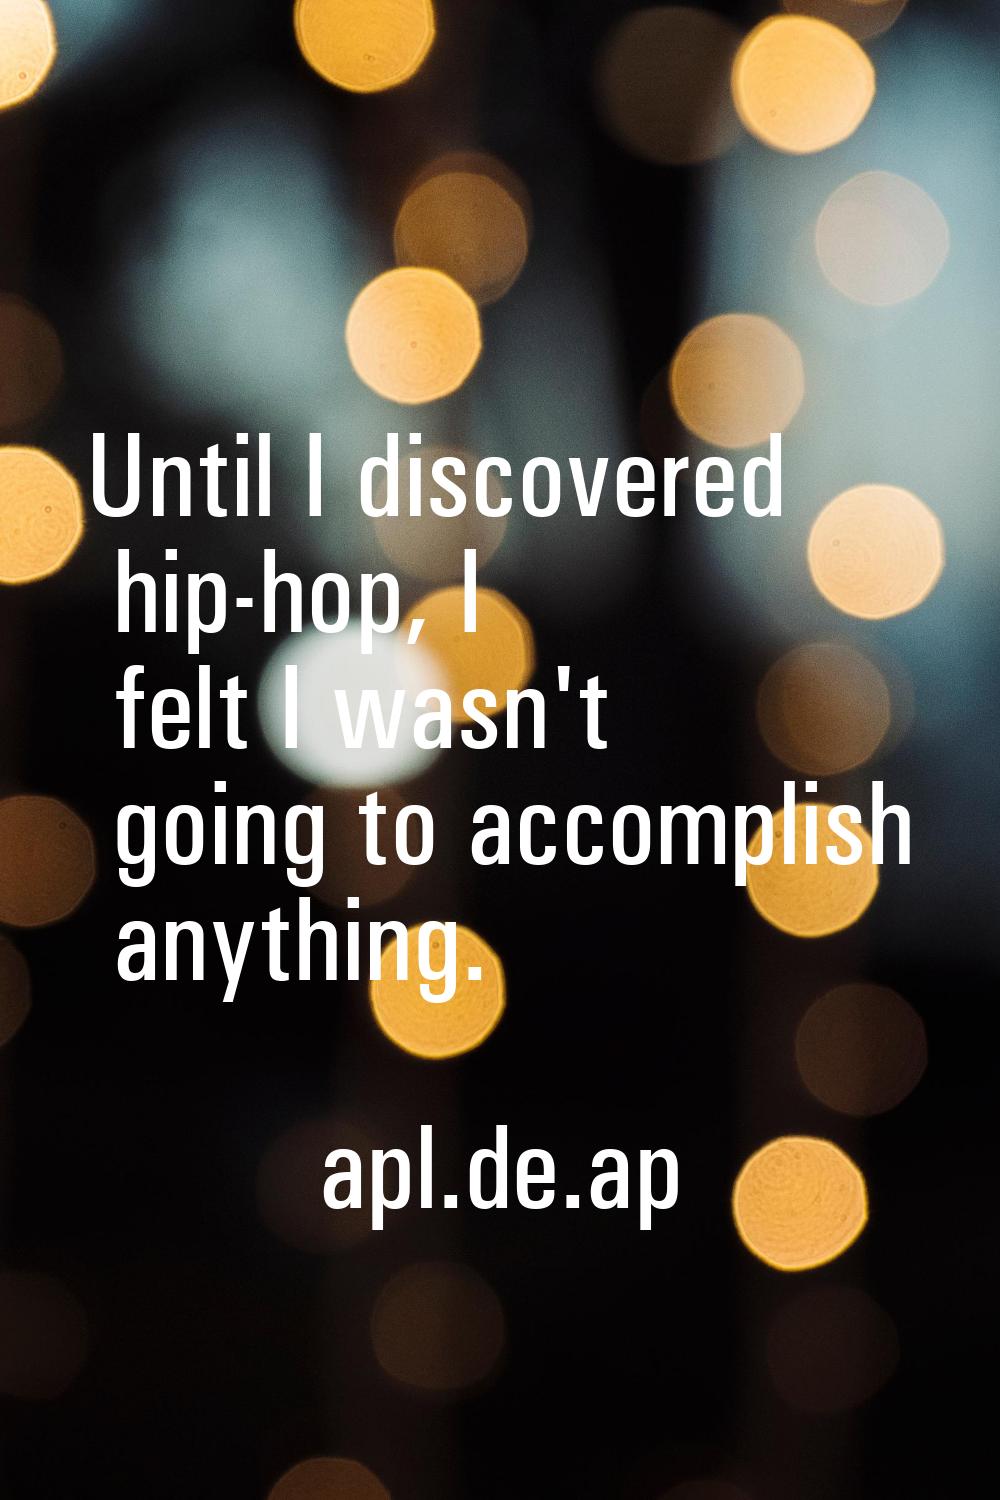 Until I discovered hip-hop, I felt I wasn't going to accomplish anything.